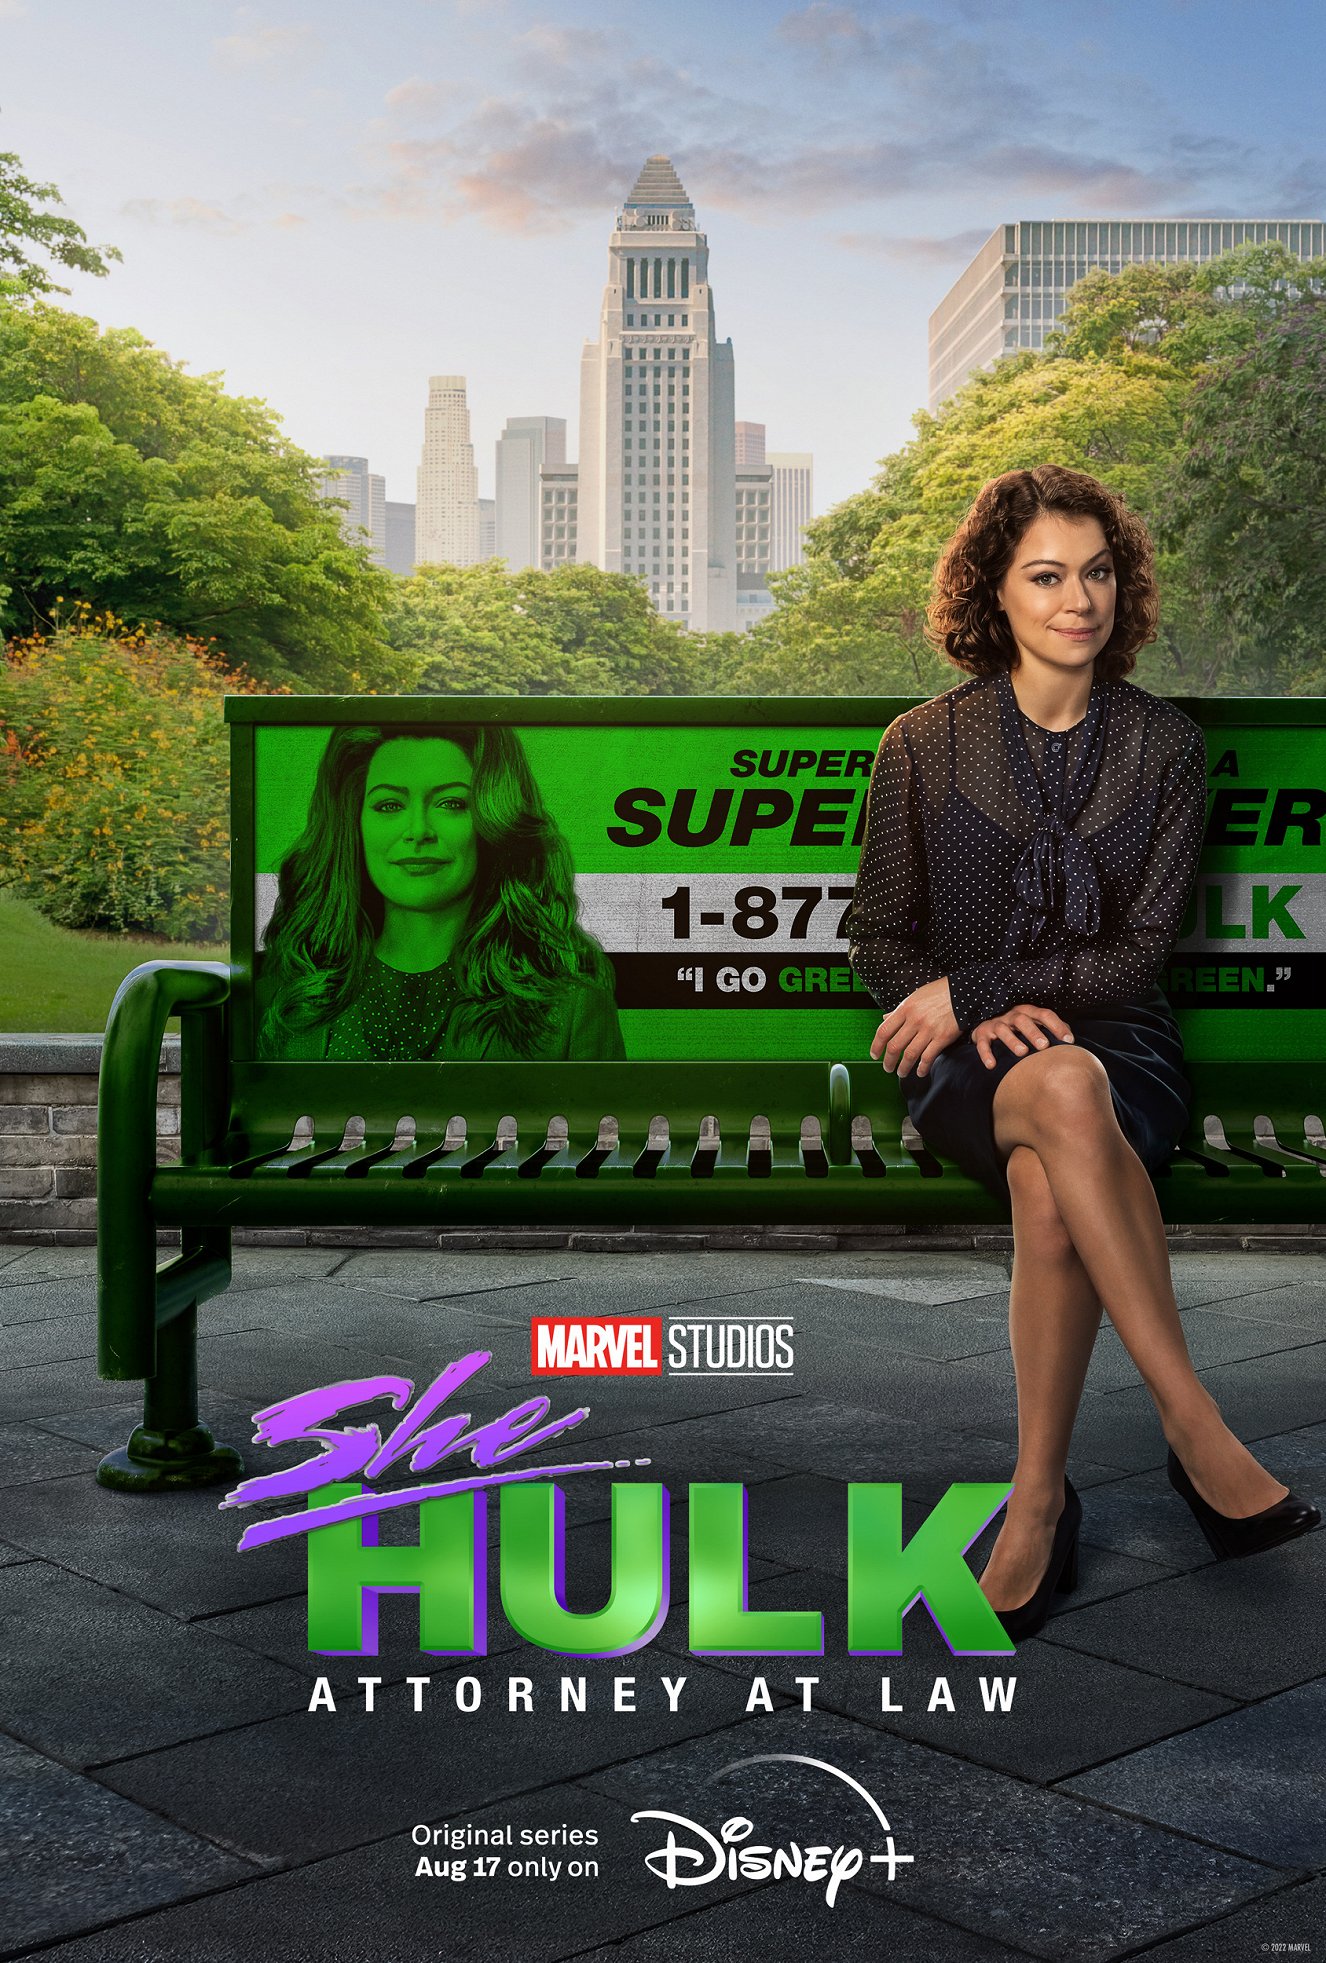 She-Hulk: Neuveritelna pravnicka / She-Hulk: Attorney at Law S01E07 (CZ/SK/EN)[WEB-DL][720p] = CSFD 50%